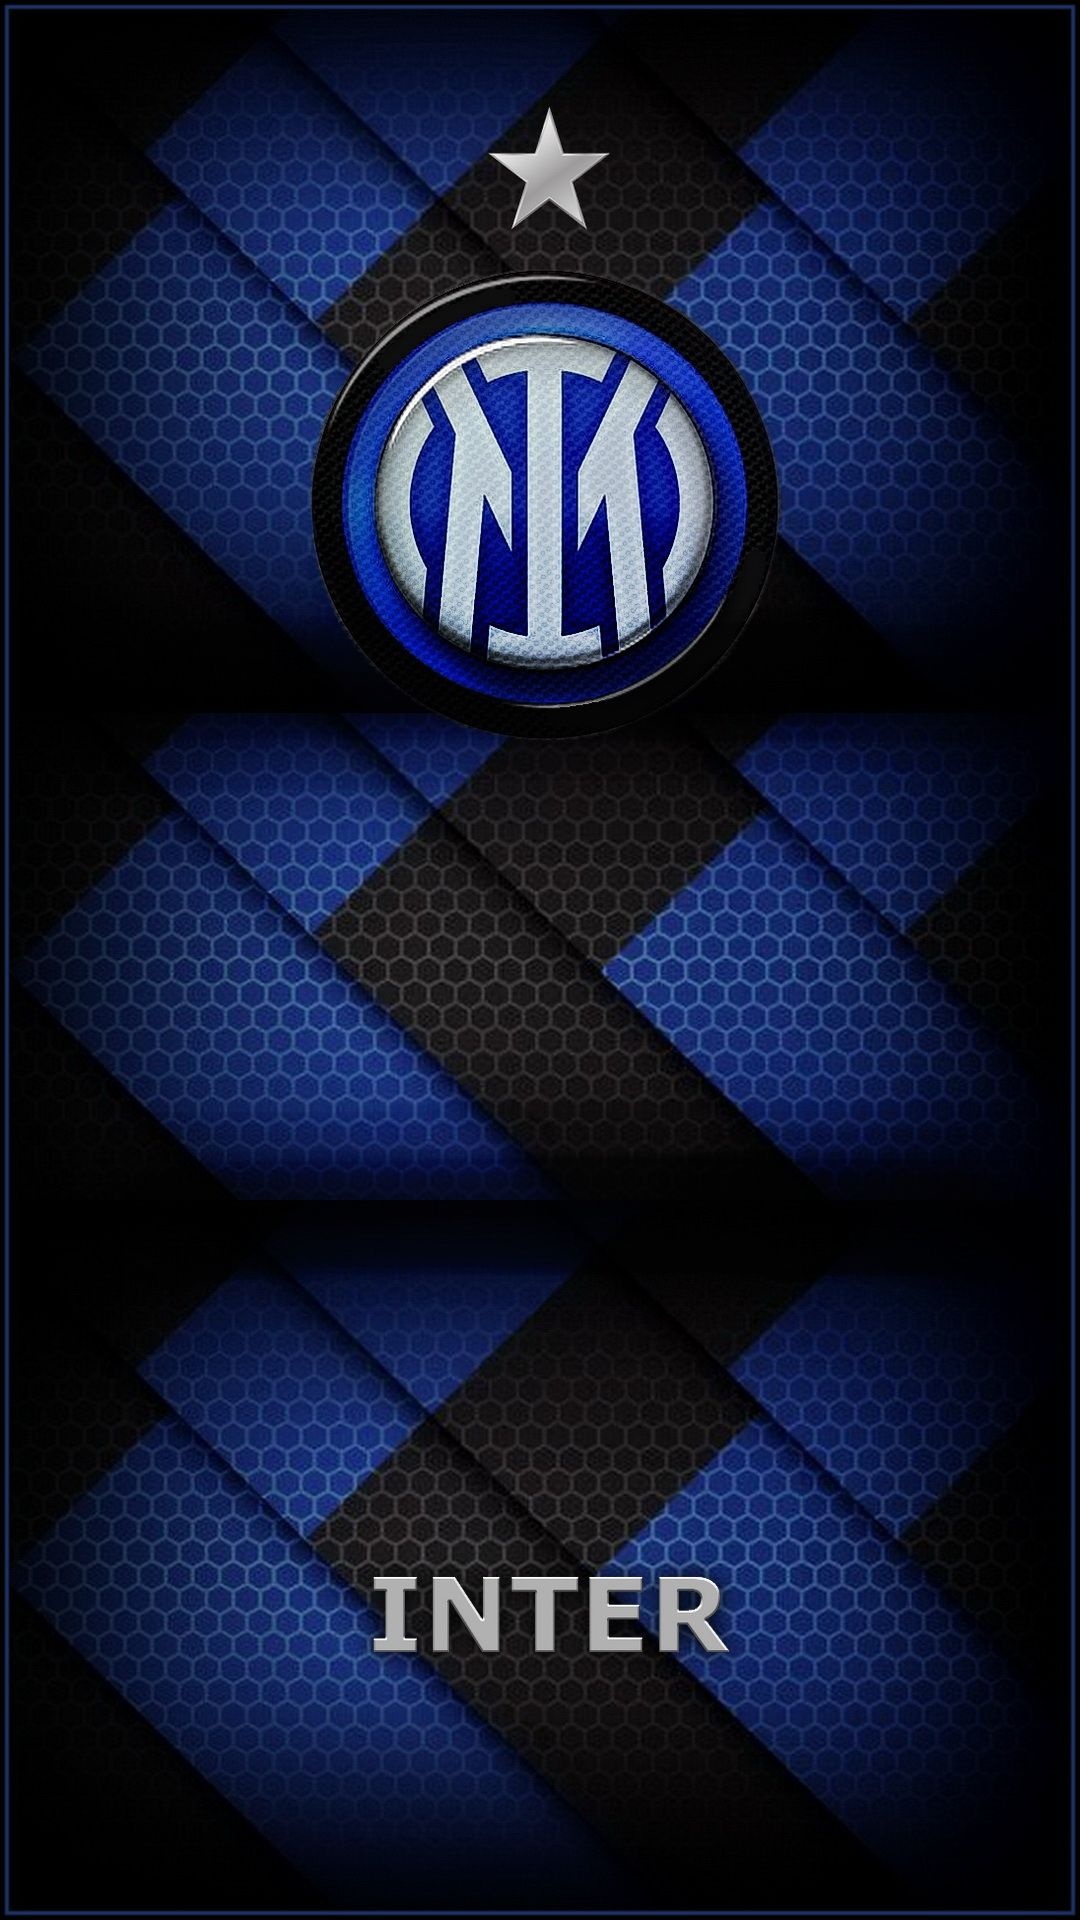 Inter: An Italian professional football club based in Milan, Lombardy. 1080x1920 Full HD Background.